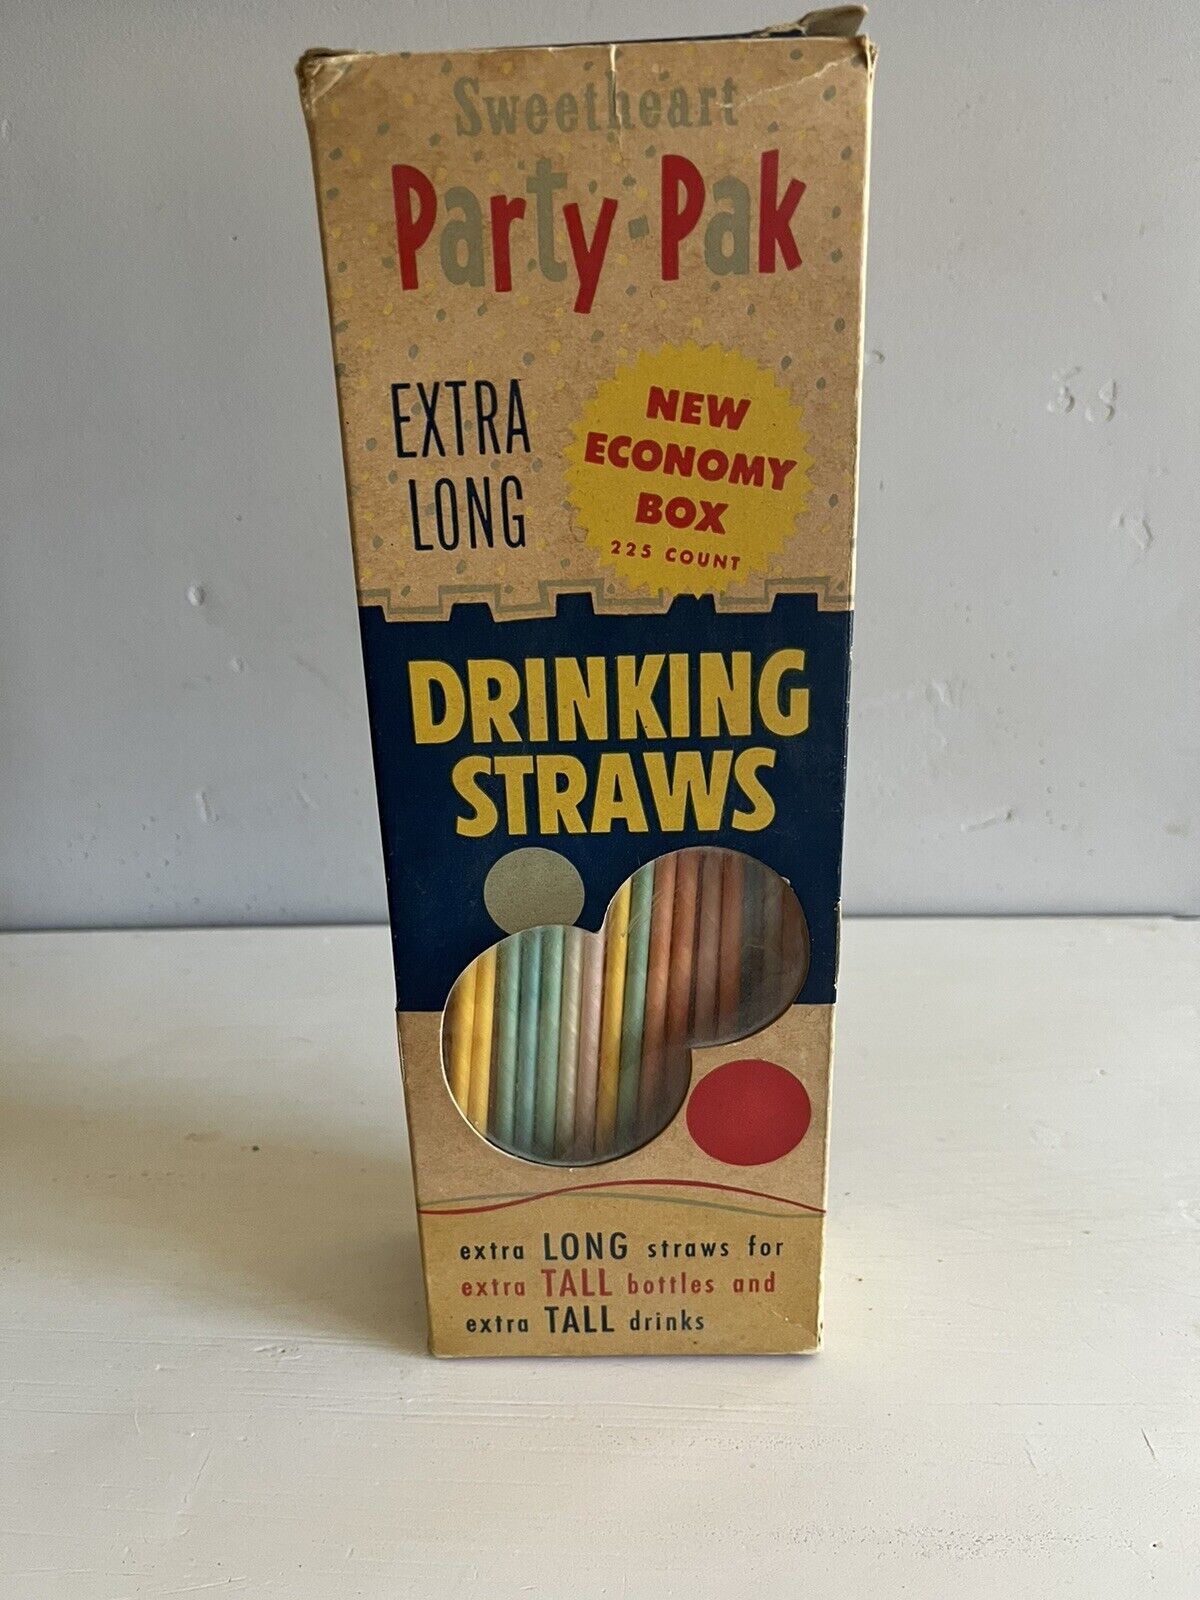 Vintage Sweetheart Party Pak Drinking Straws